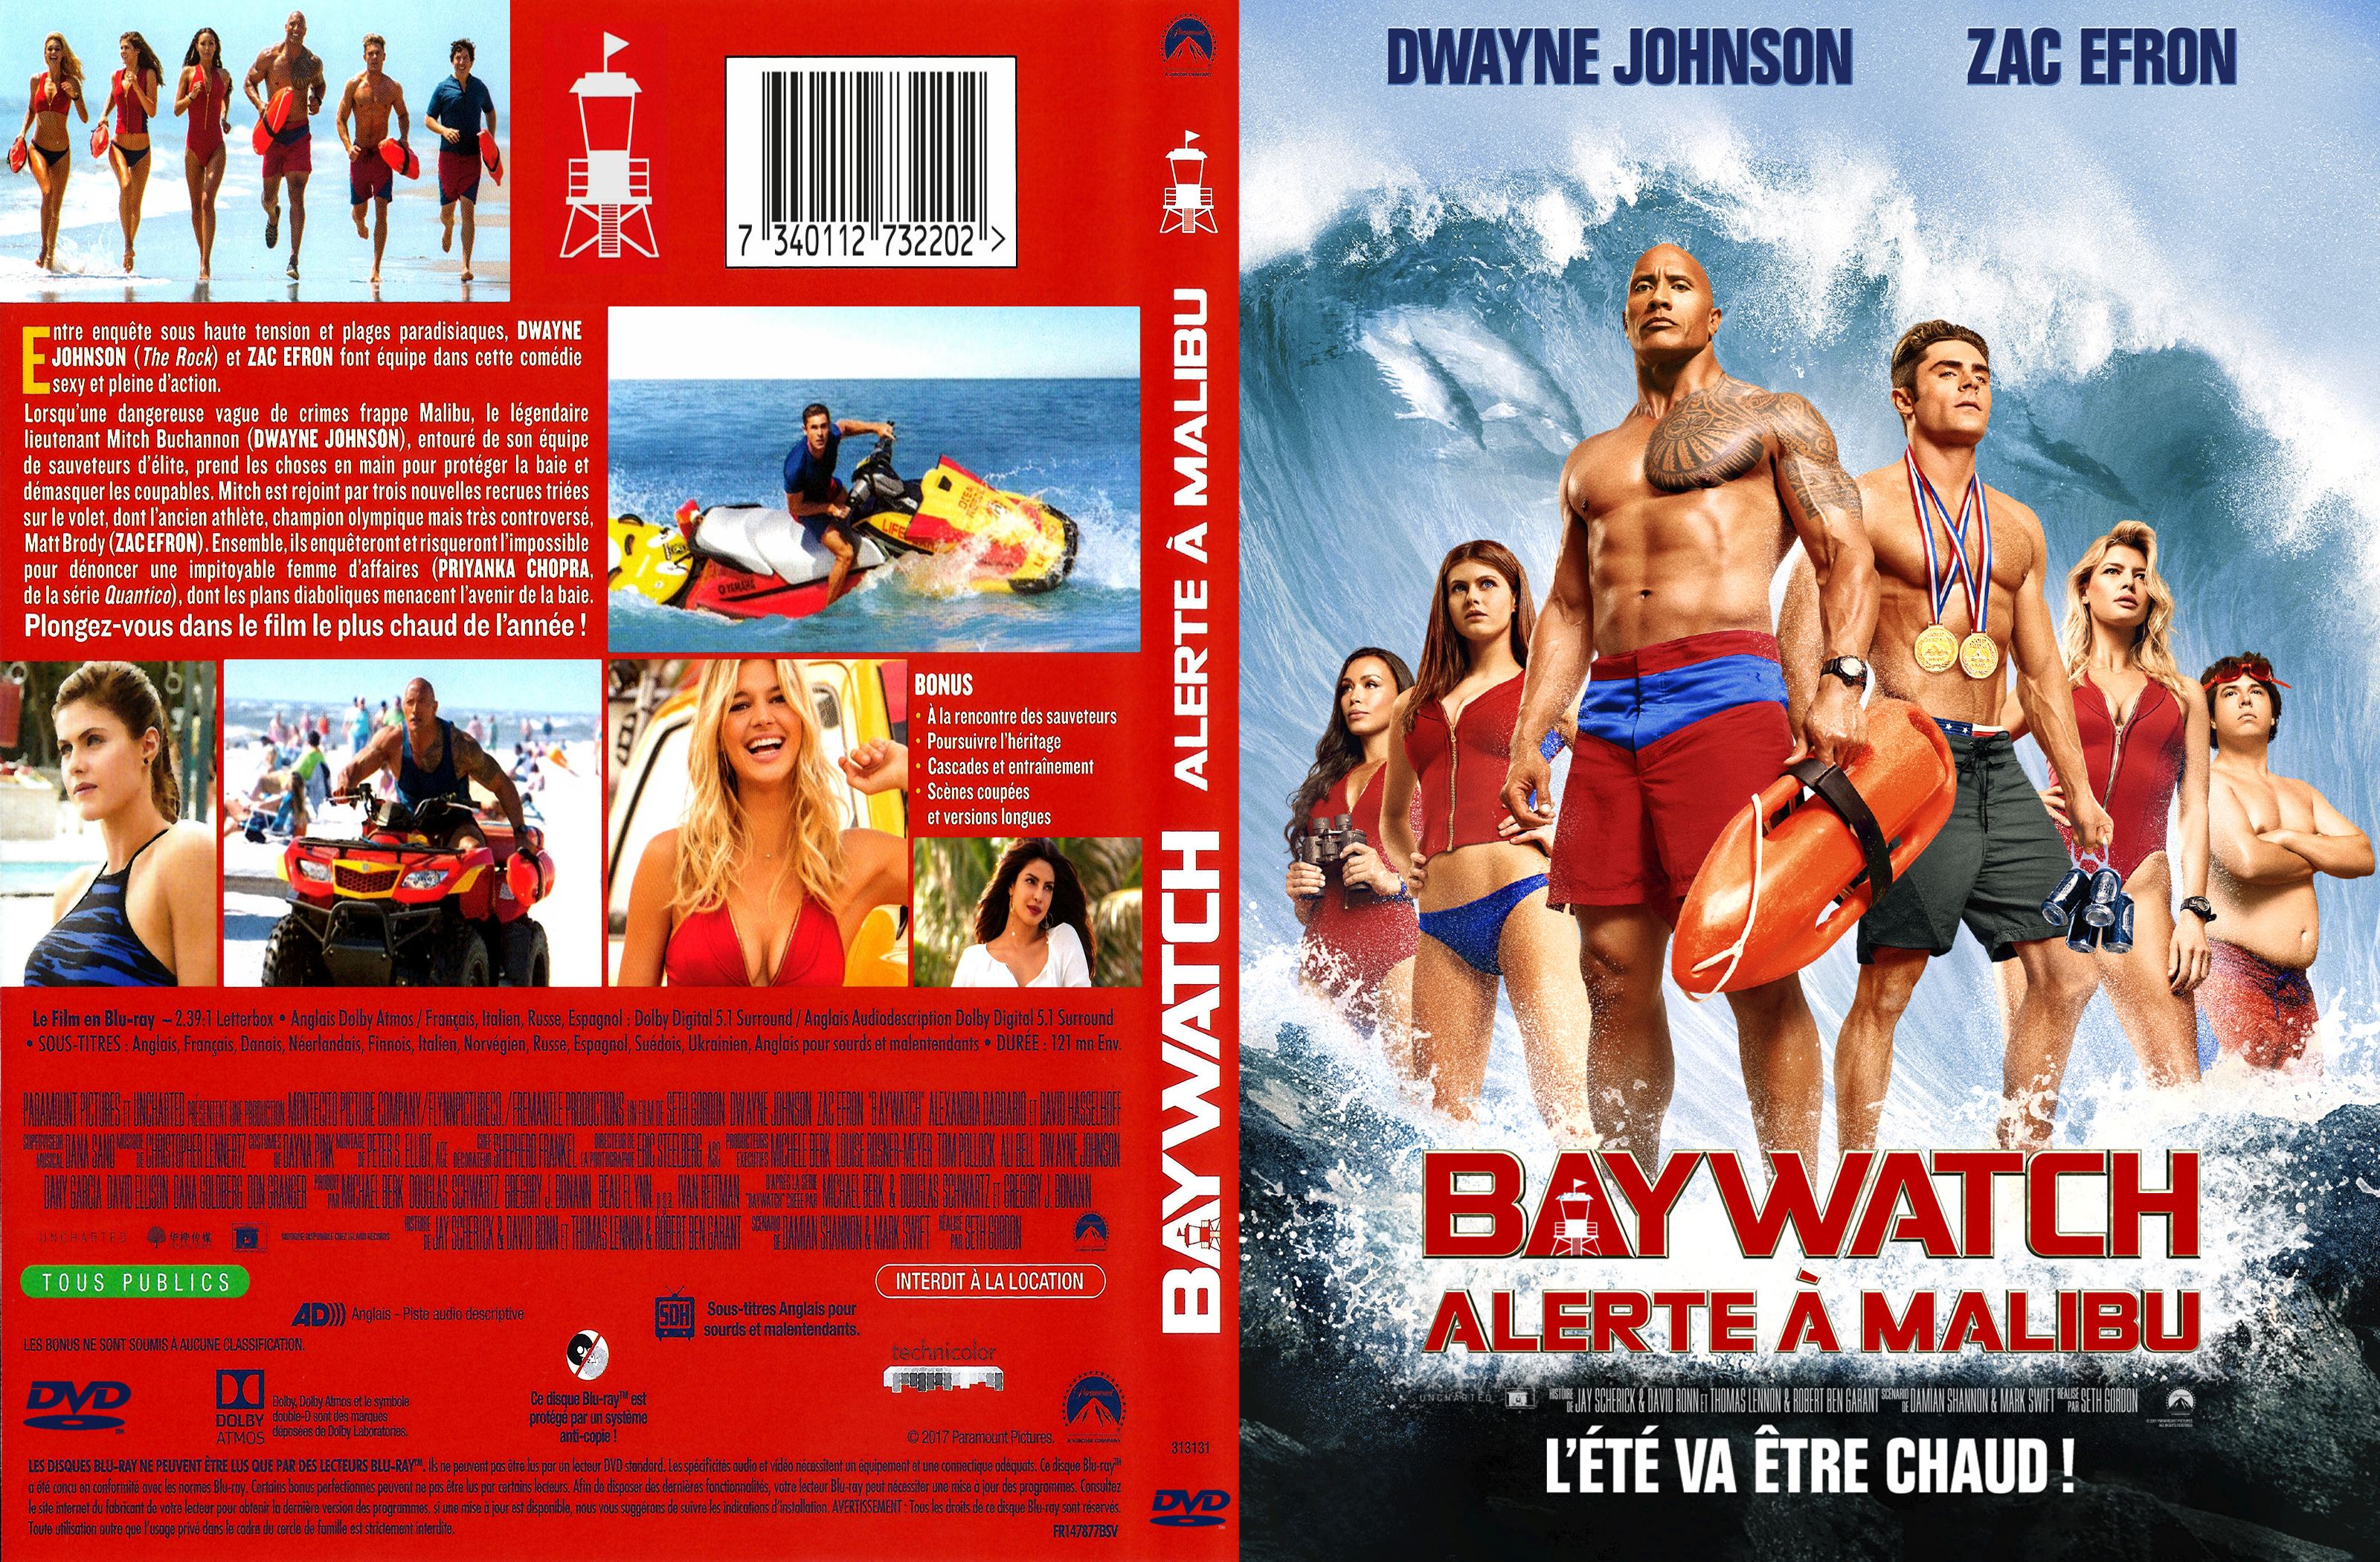 Jaquette DVD Baywatch - Alerte  Malibu custom v2